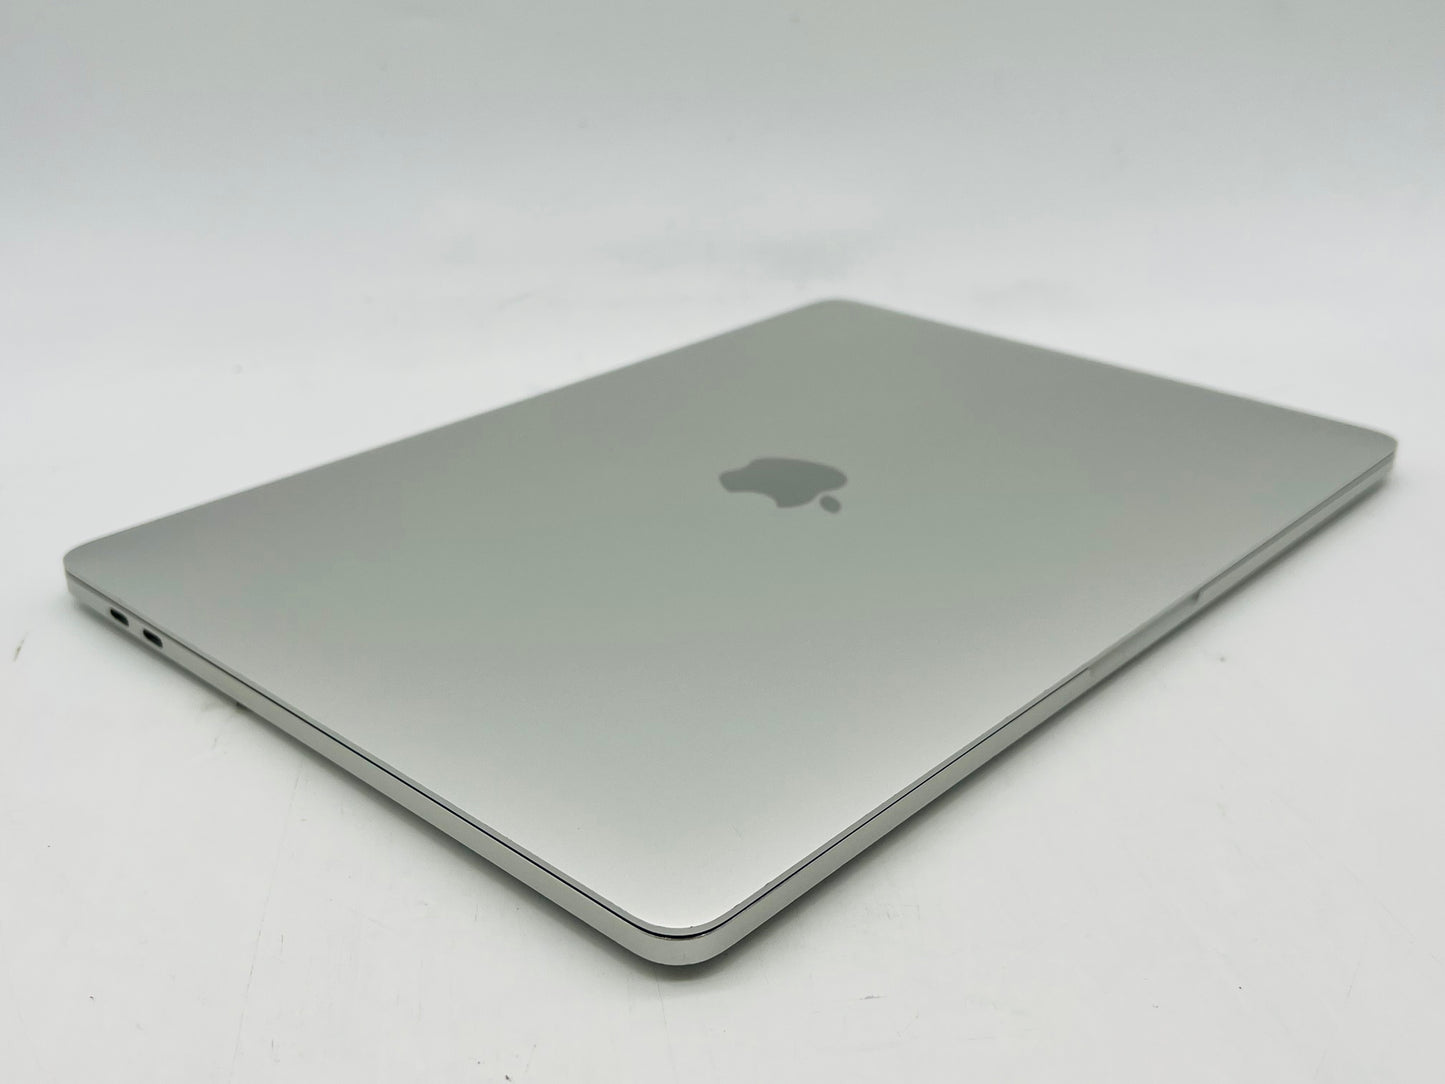 Apple 2019 MacBook Pro 13 in TB 1.4GHz i5 8GB RAM 256GB SSD IIPG645 - Very Good